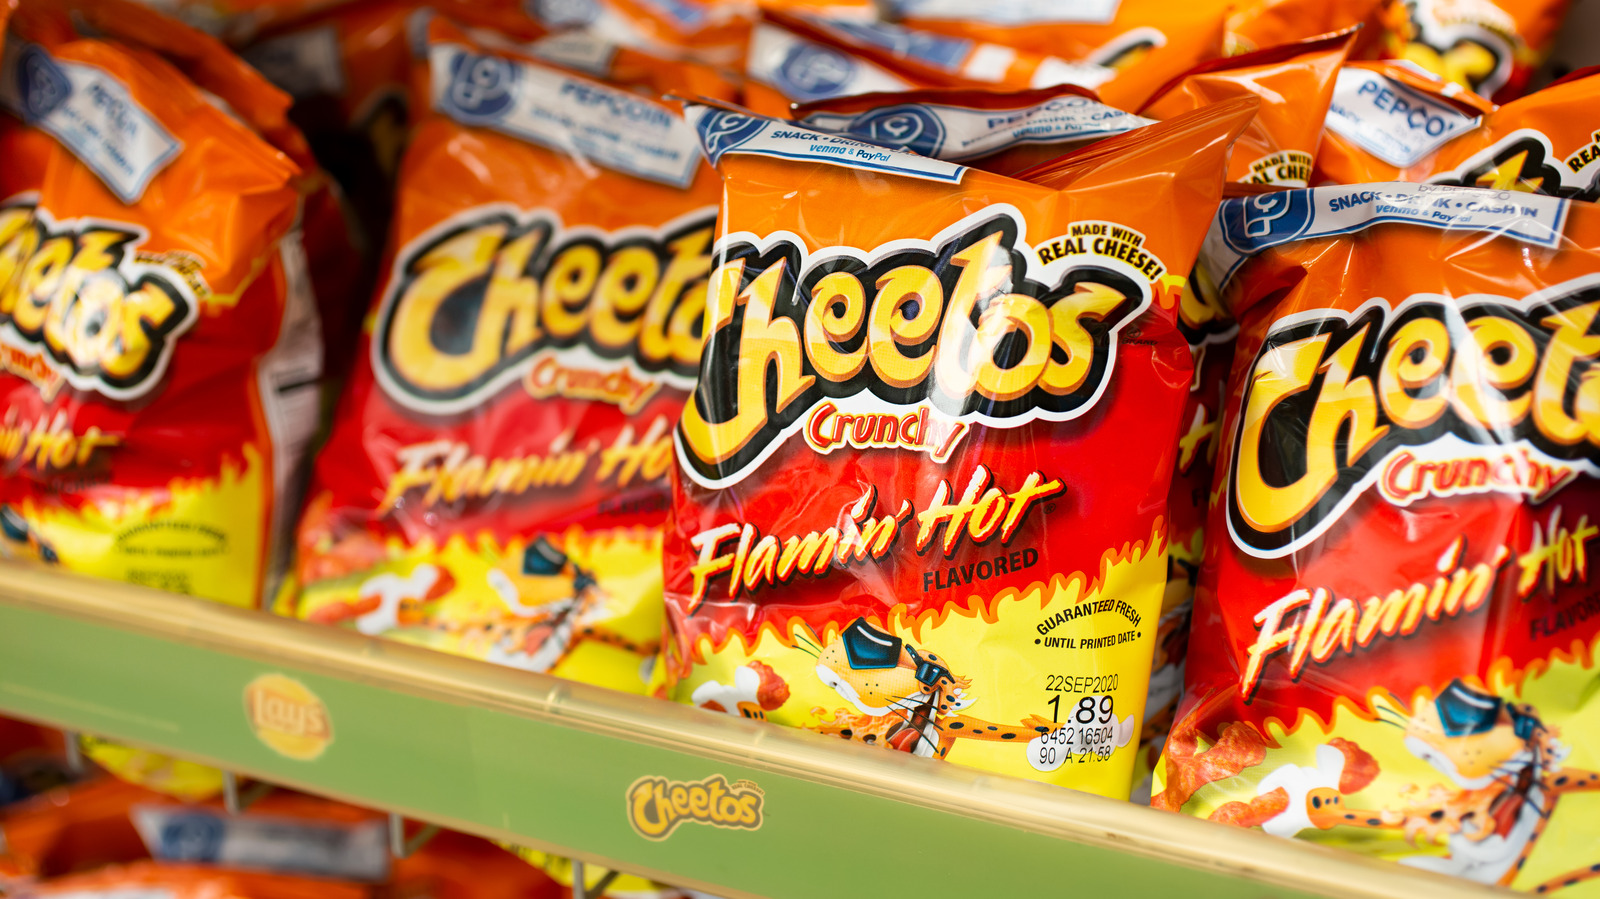 Cheetos Marketing